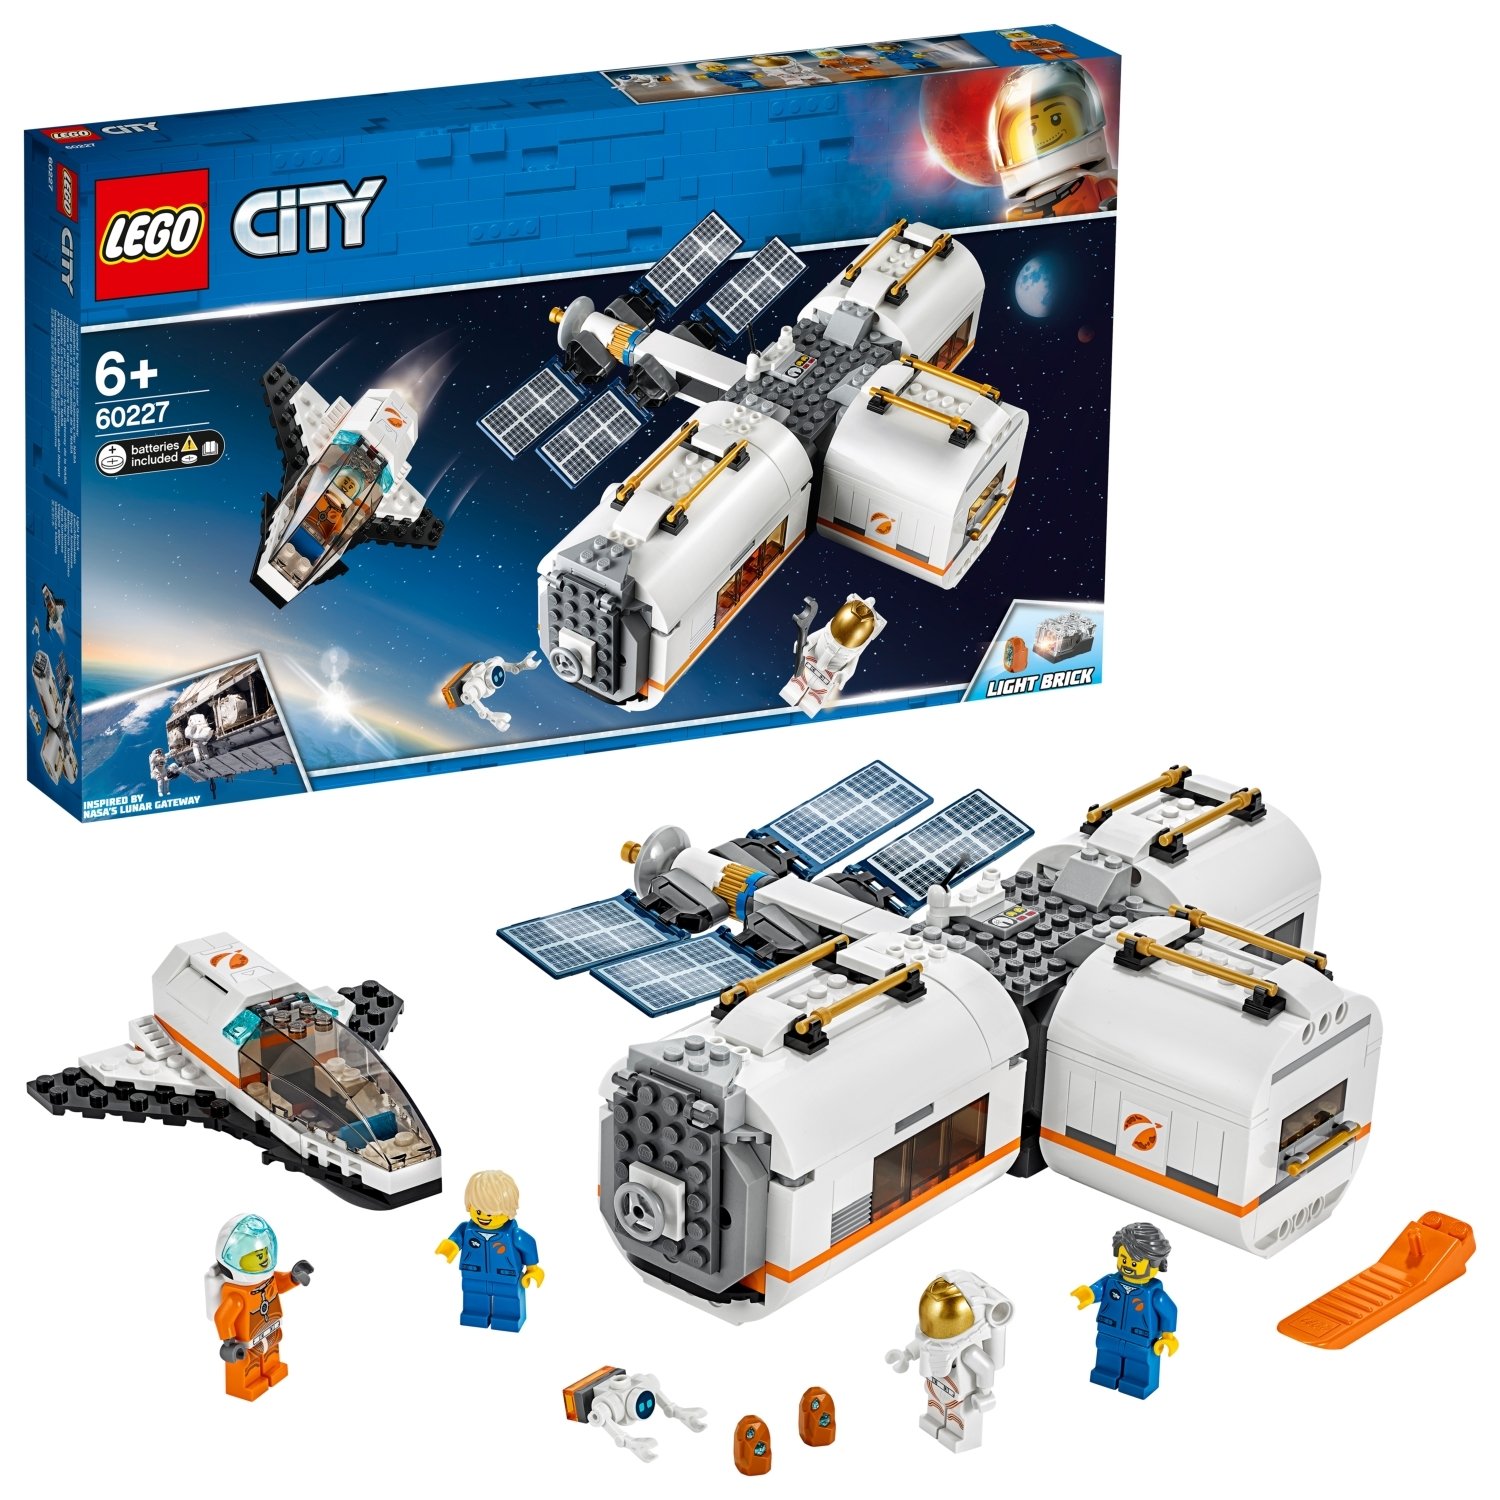 LEGO City Lunar Space Station Playset - 60227